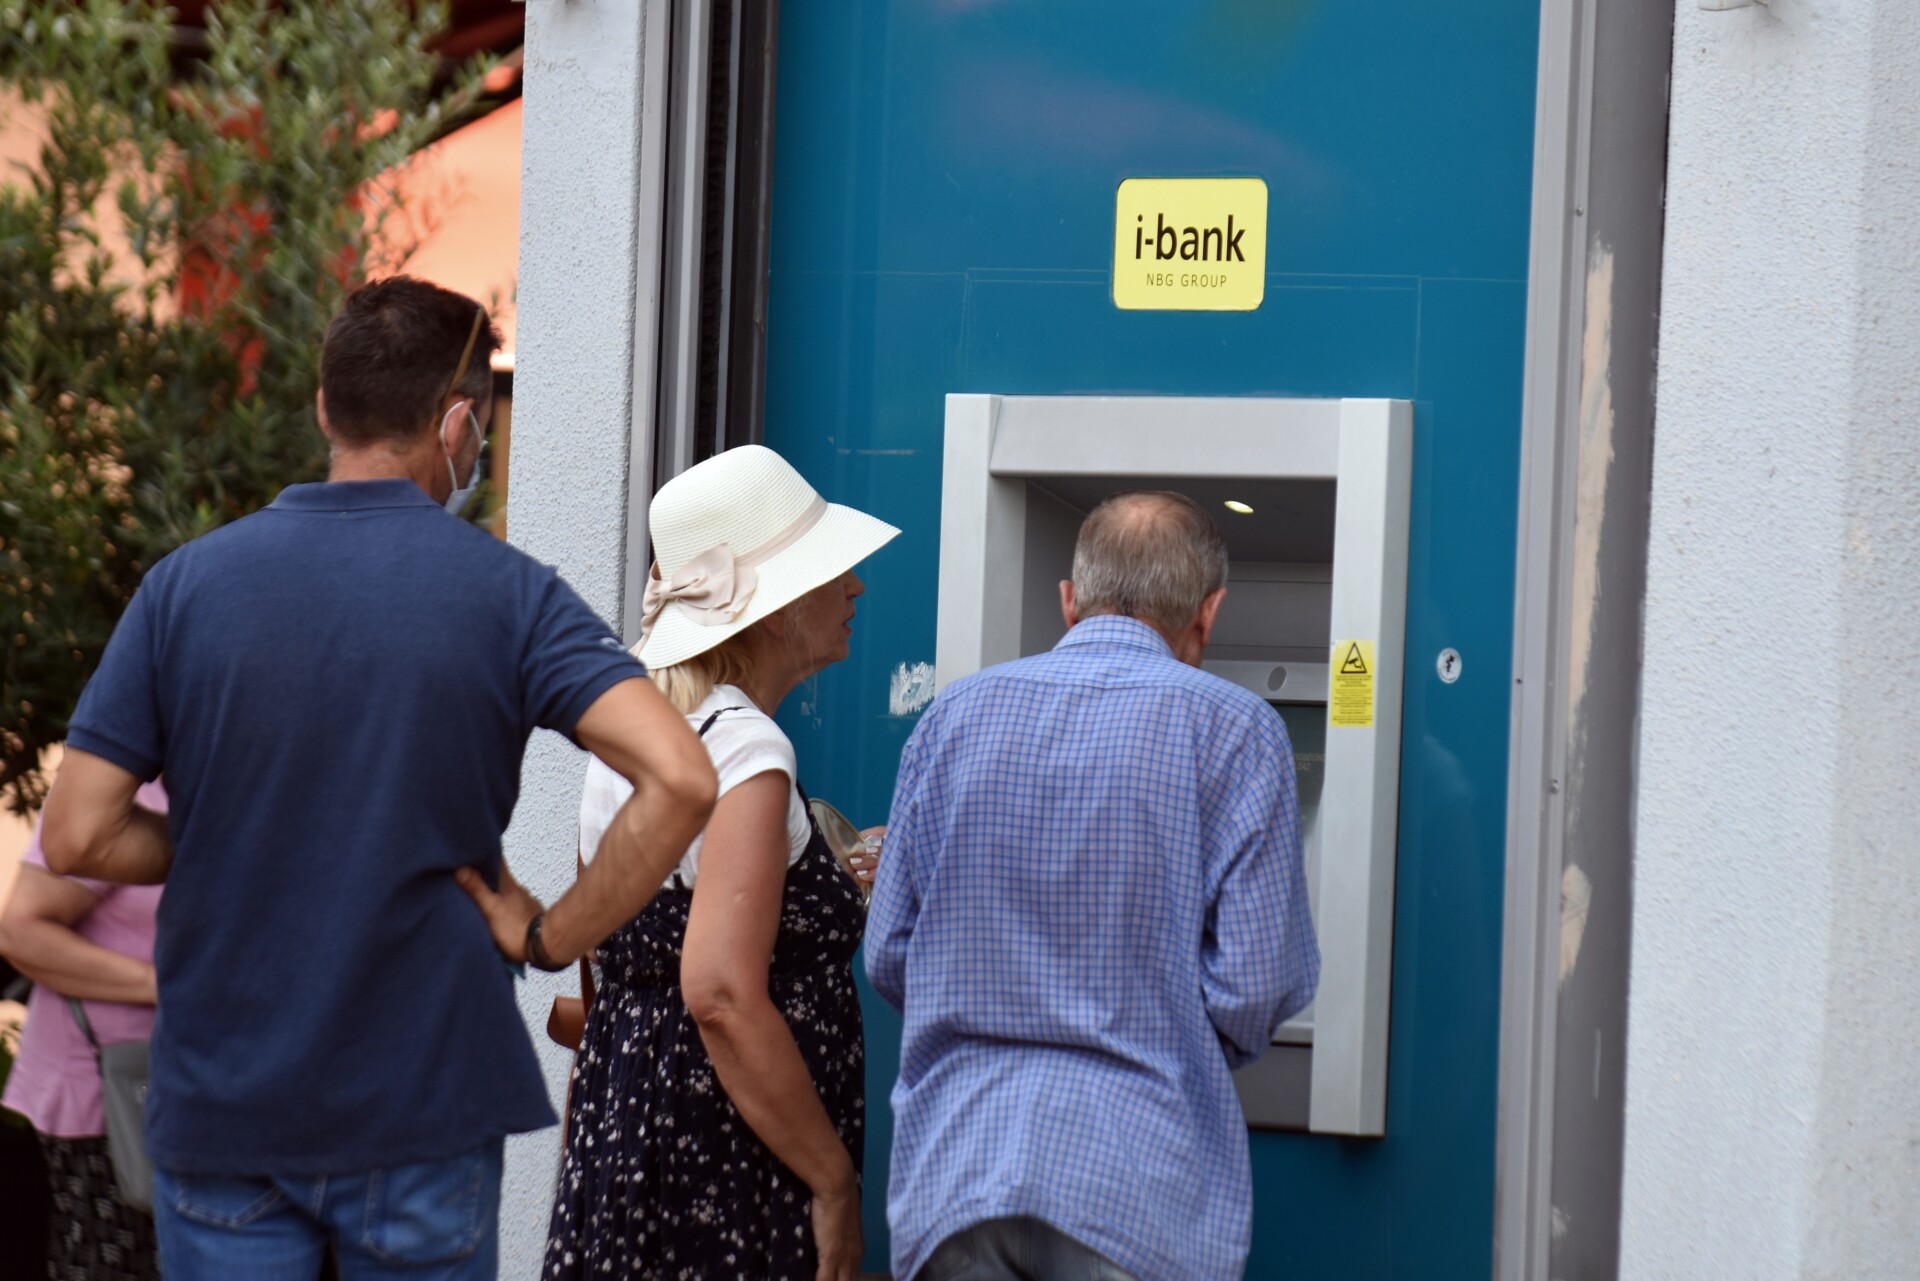 ATM © Eurokinissi